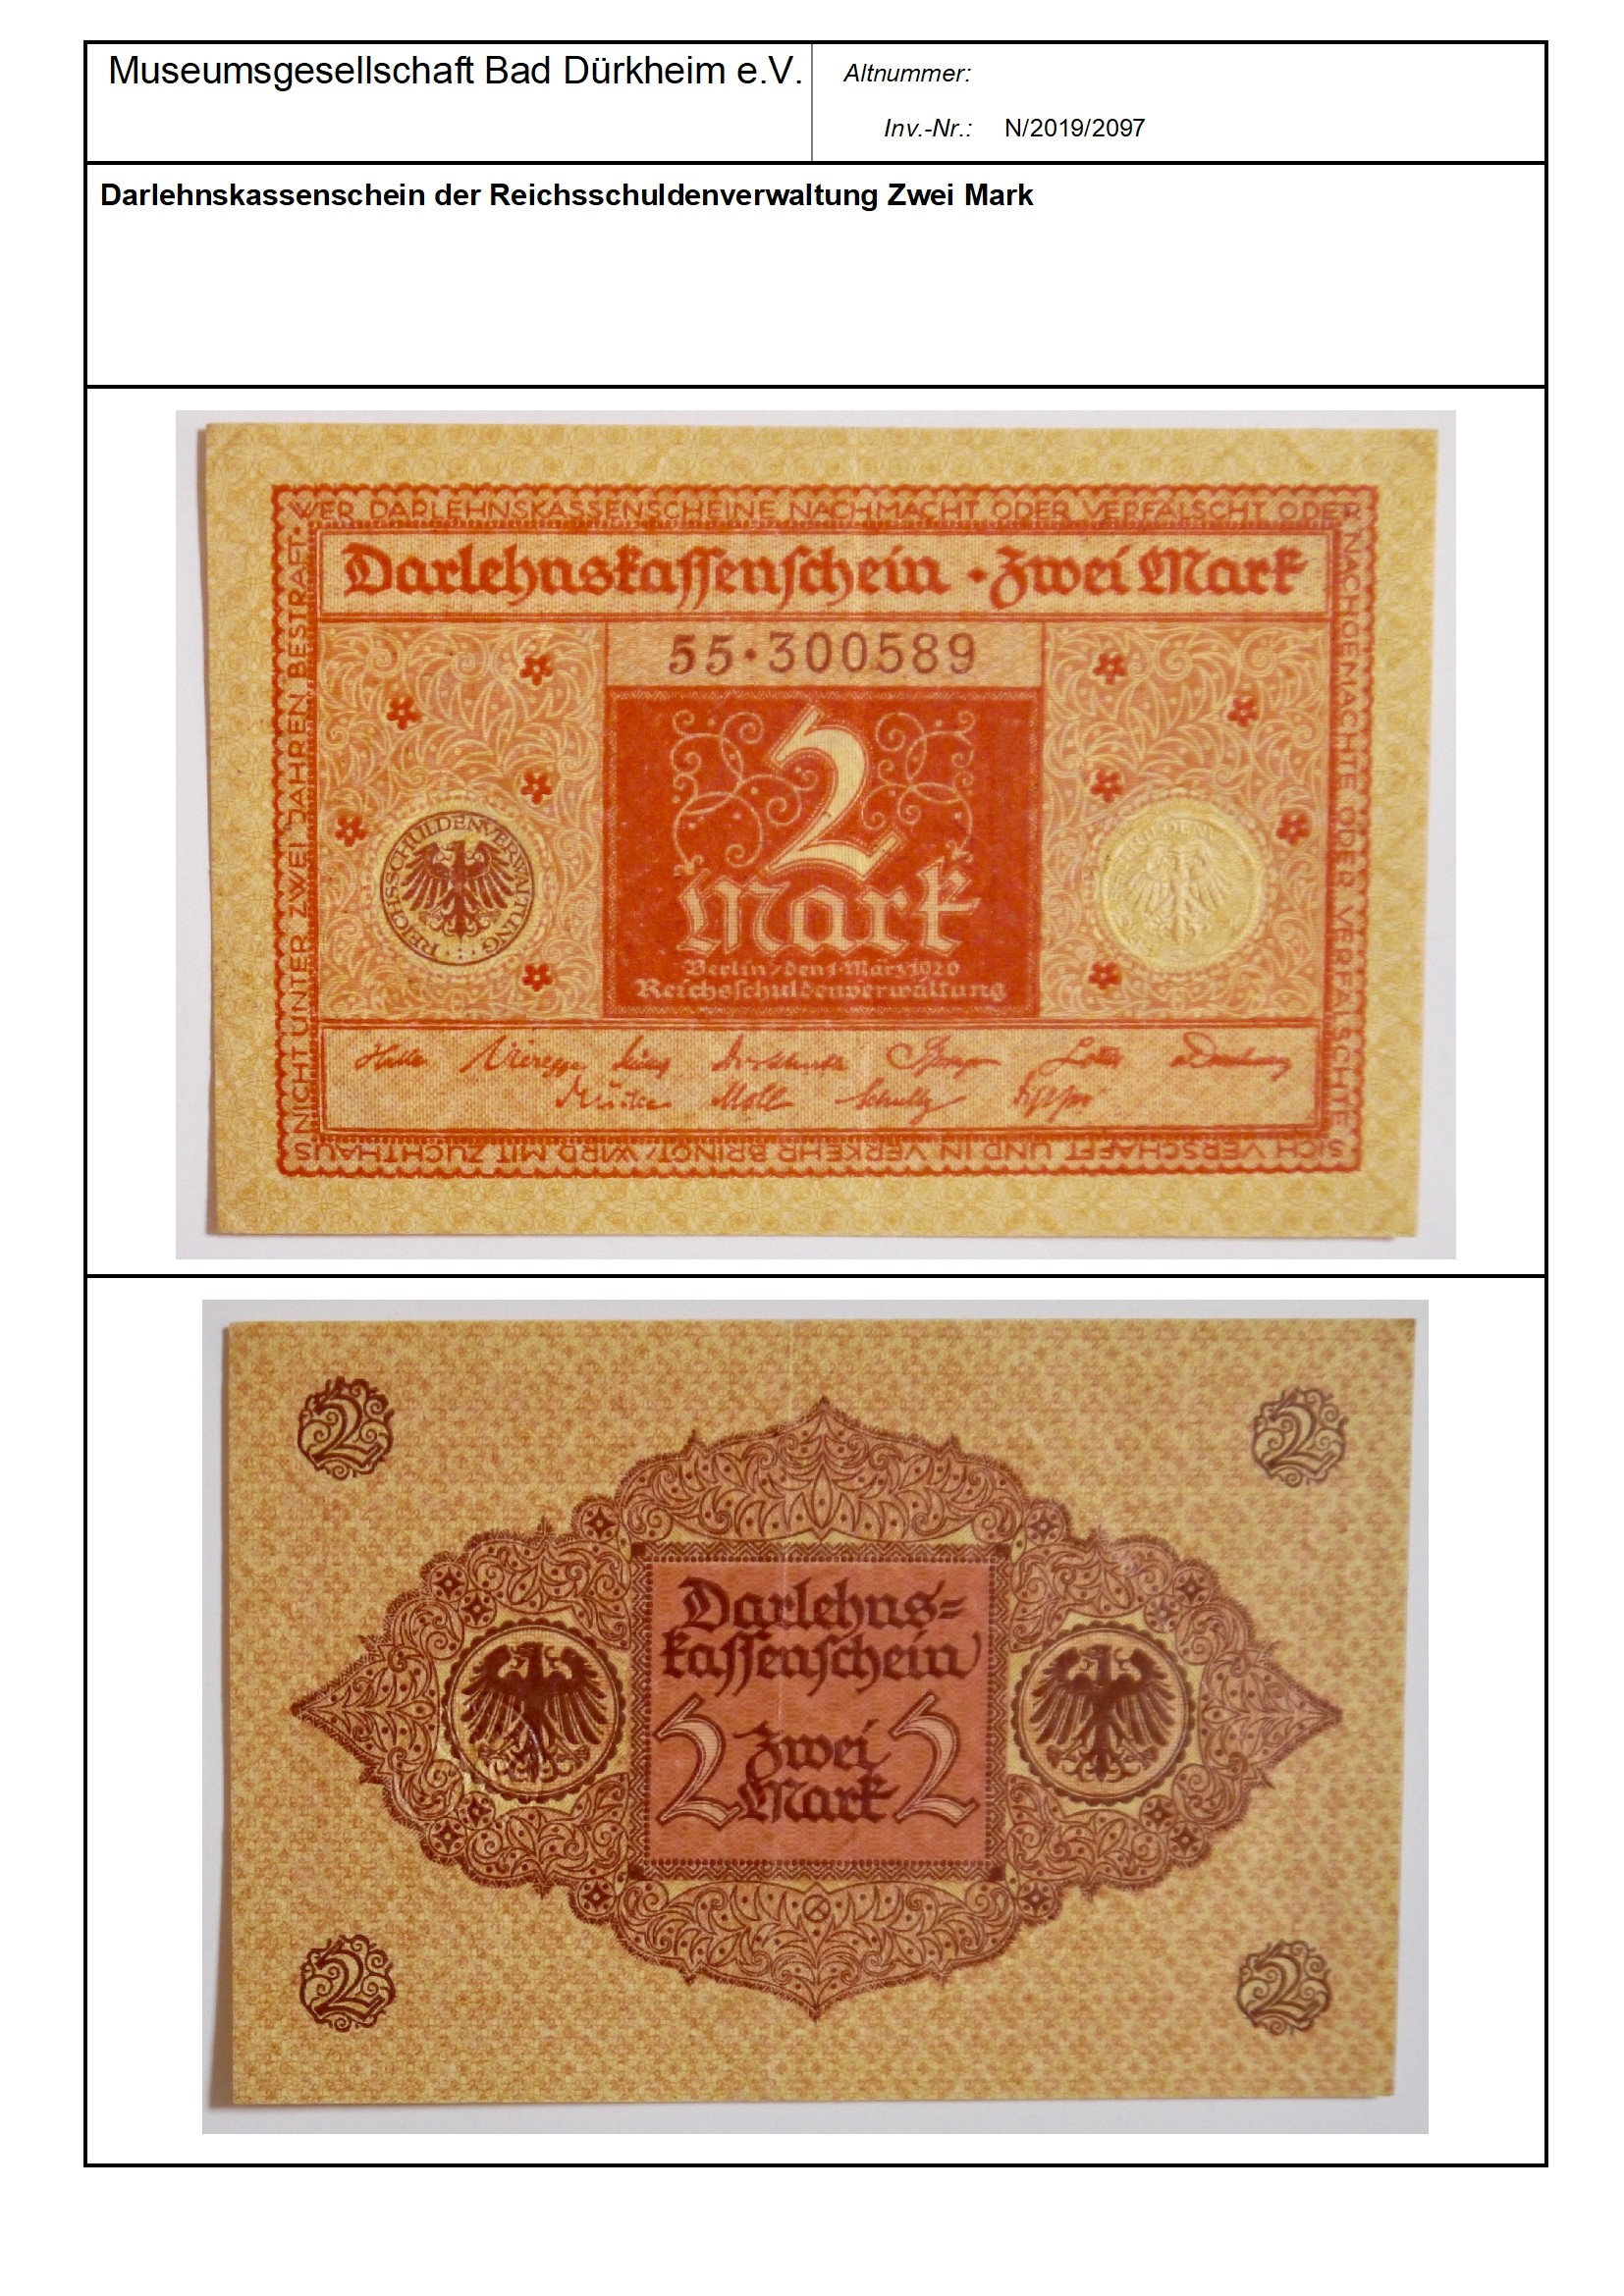 Darlehnskassenschein der Reichsschuldenverwaltung Zwei Mark
Serien-Nummer: 55*300589 (Museumsgesellschaft Bad Dürkheim e.V. CC BY-NC-SA)